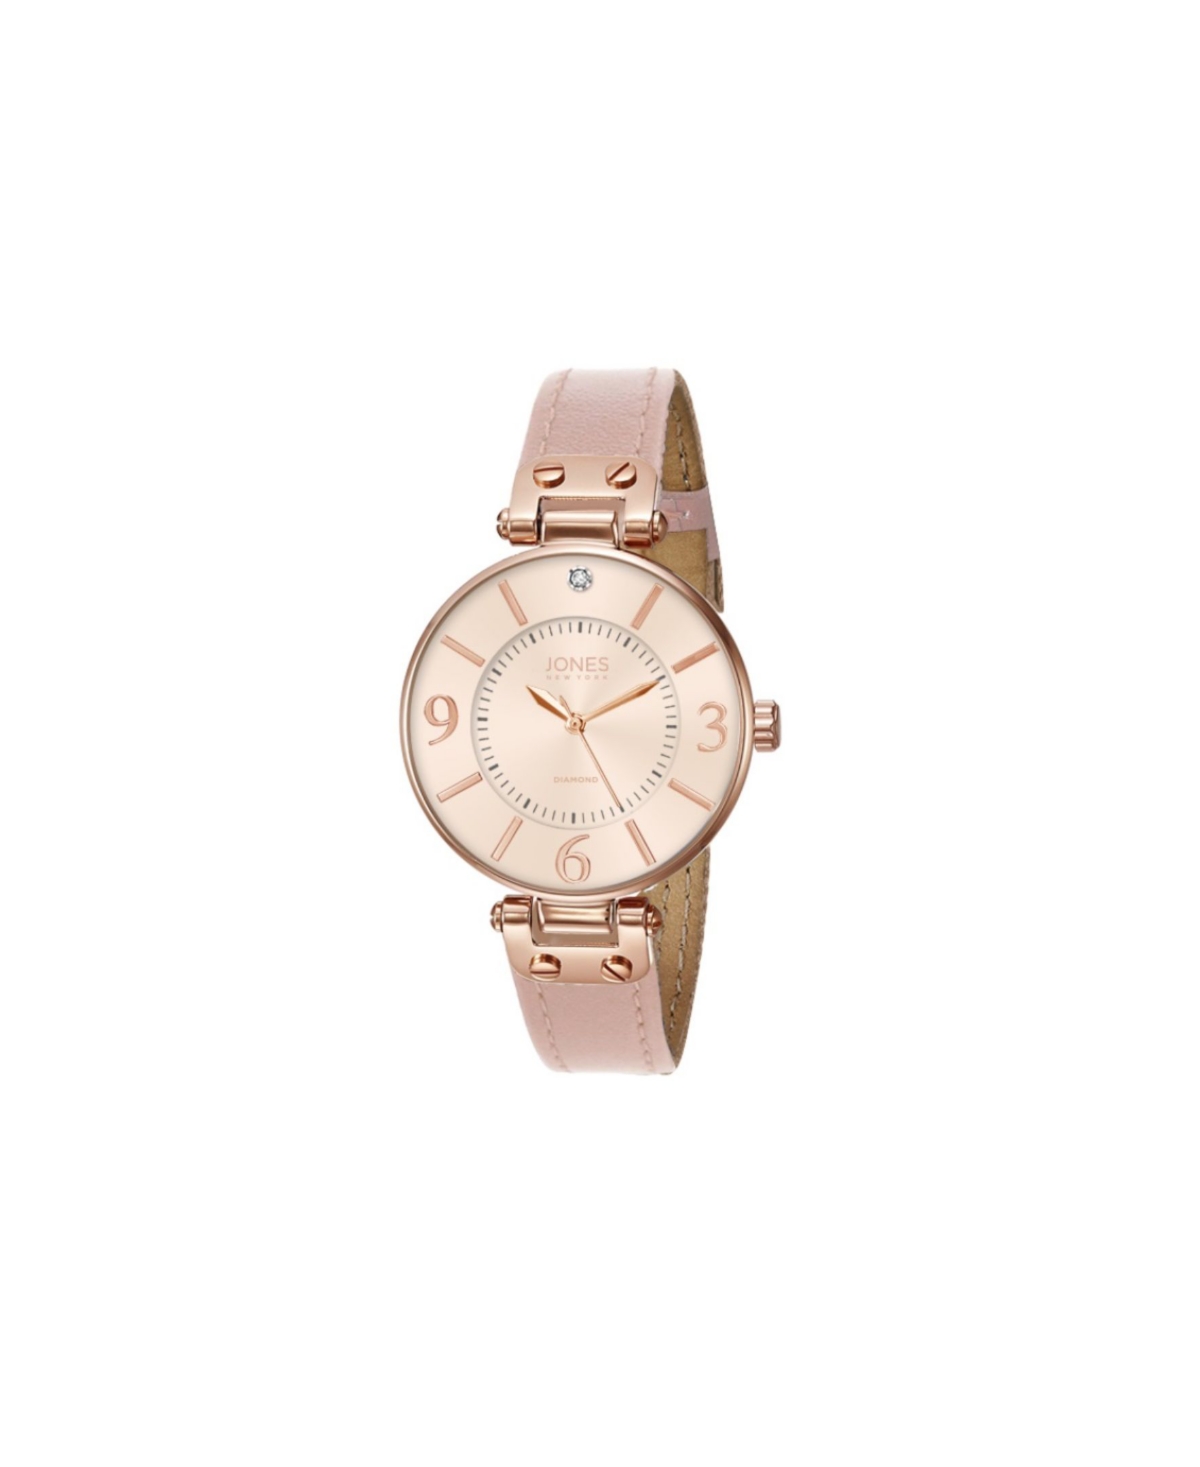 Women's Blush Silicone Strap Watch 34mm - Rose Gold-Tone, Blush